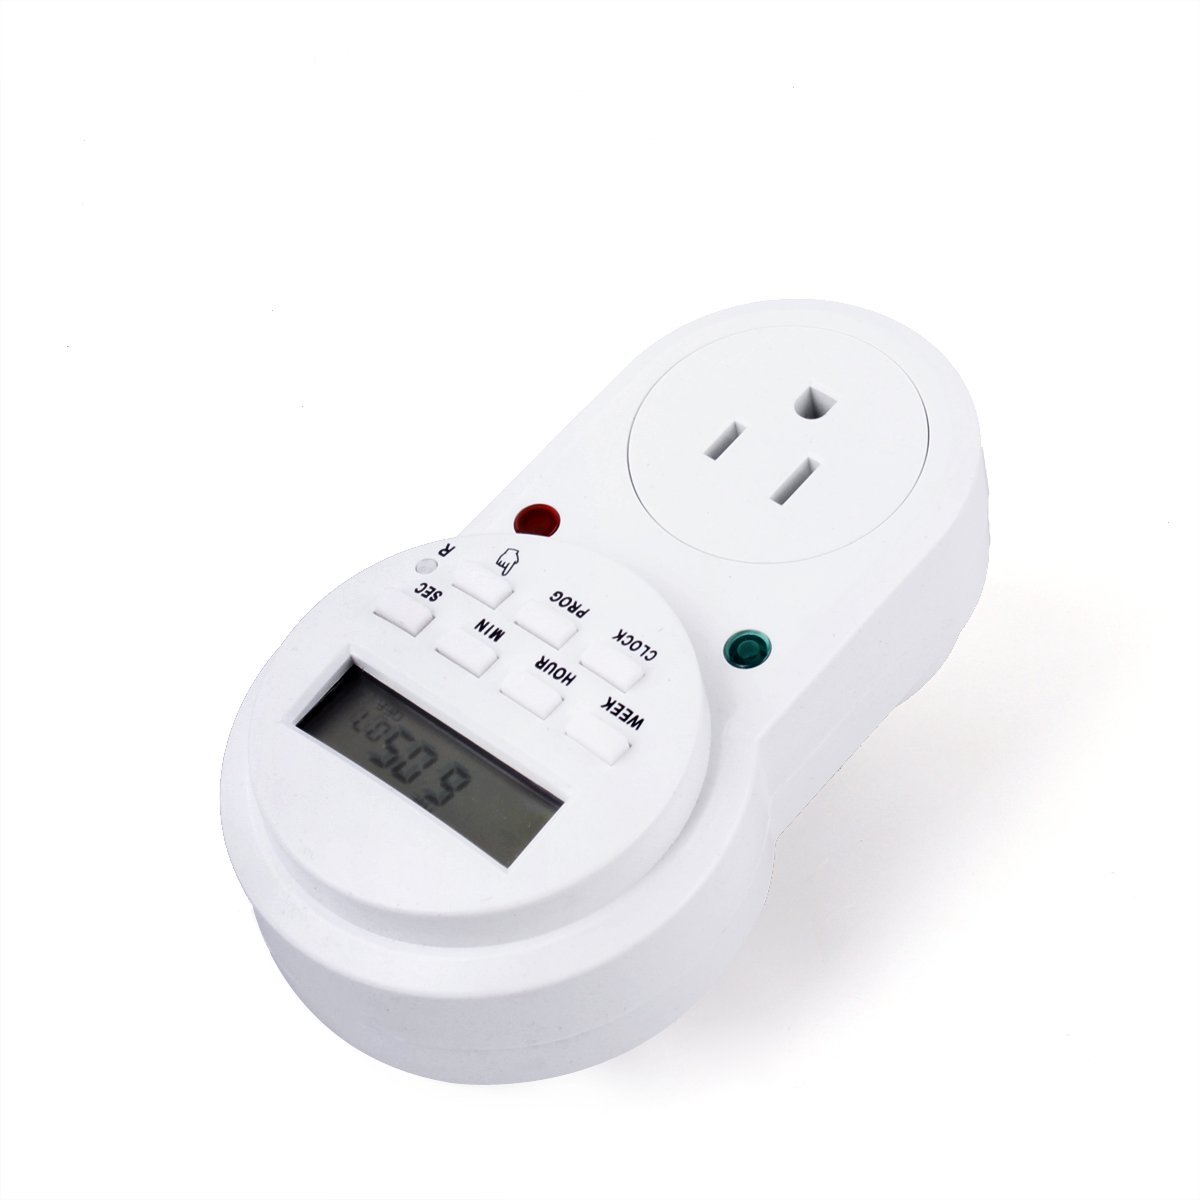 Digital-Programmable-Electronic-Energy-Saving-Timer-Socket-US-Plug-1102016-2